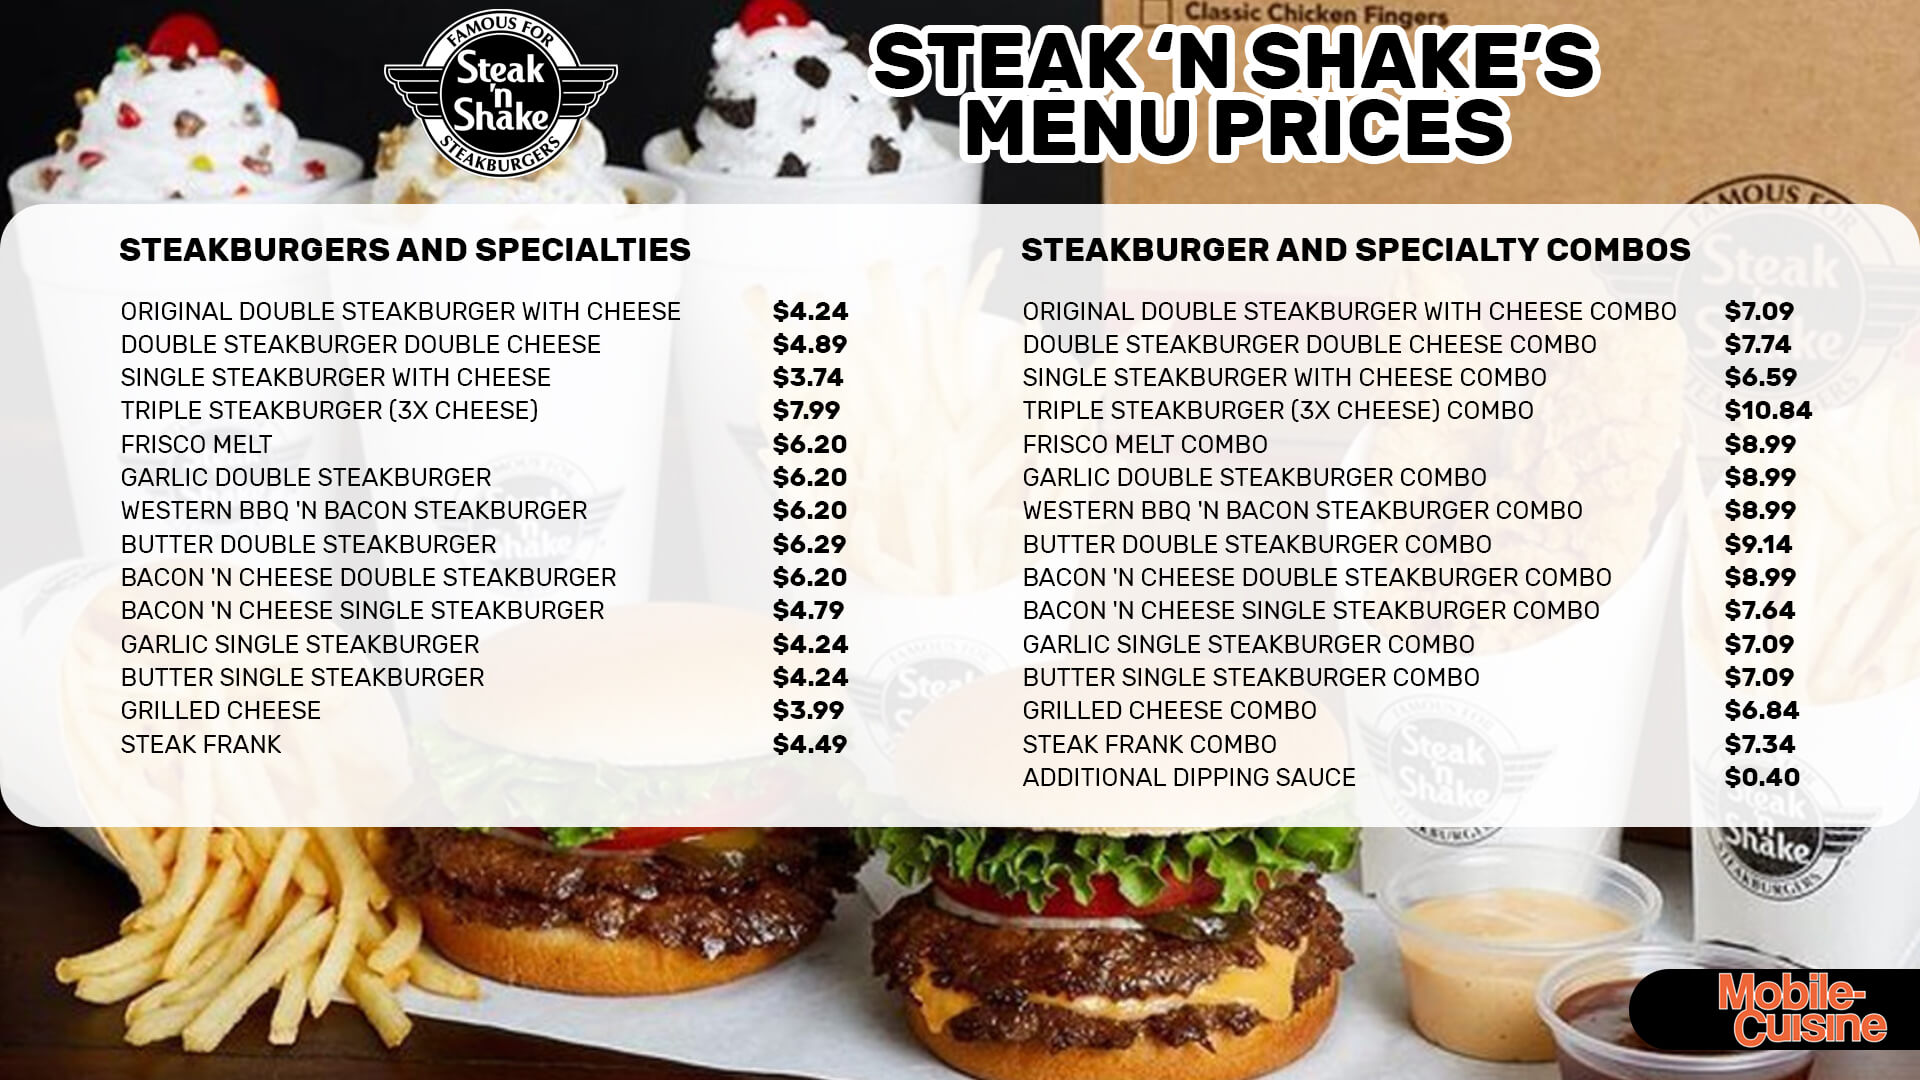 https://mobile-cuisine.com/wp-content/uploads/2023/01/Steak-%E2%80%98n-Shake-menu-prices.jpg